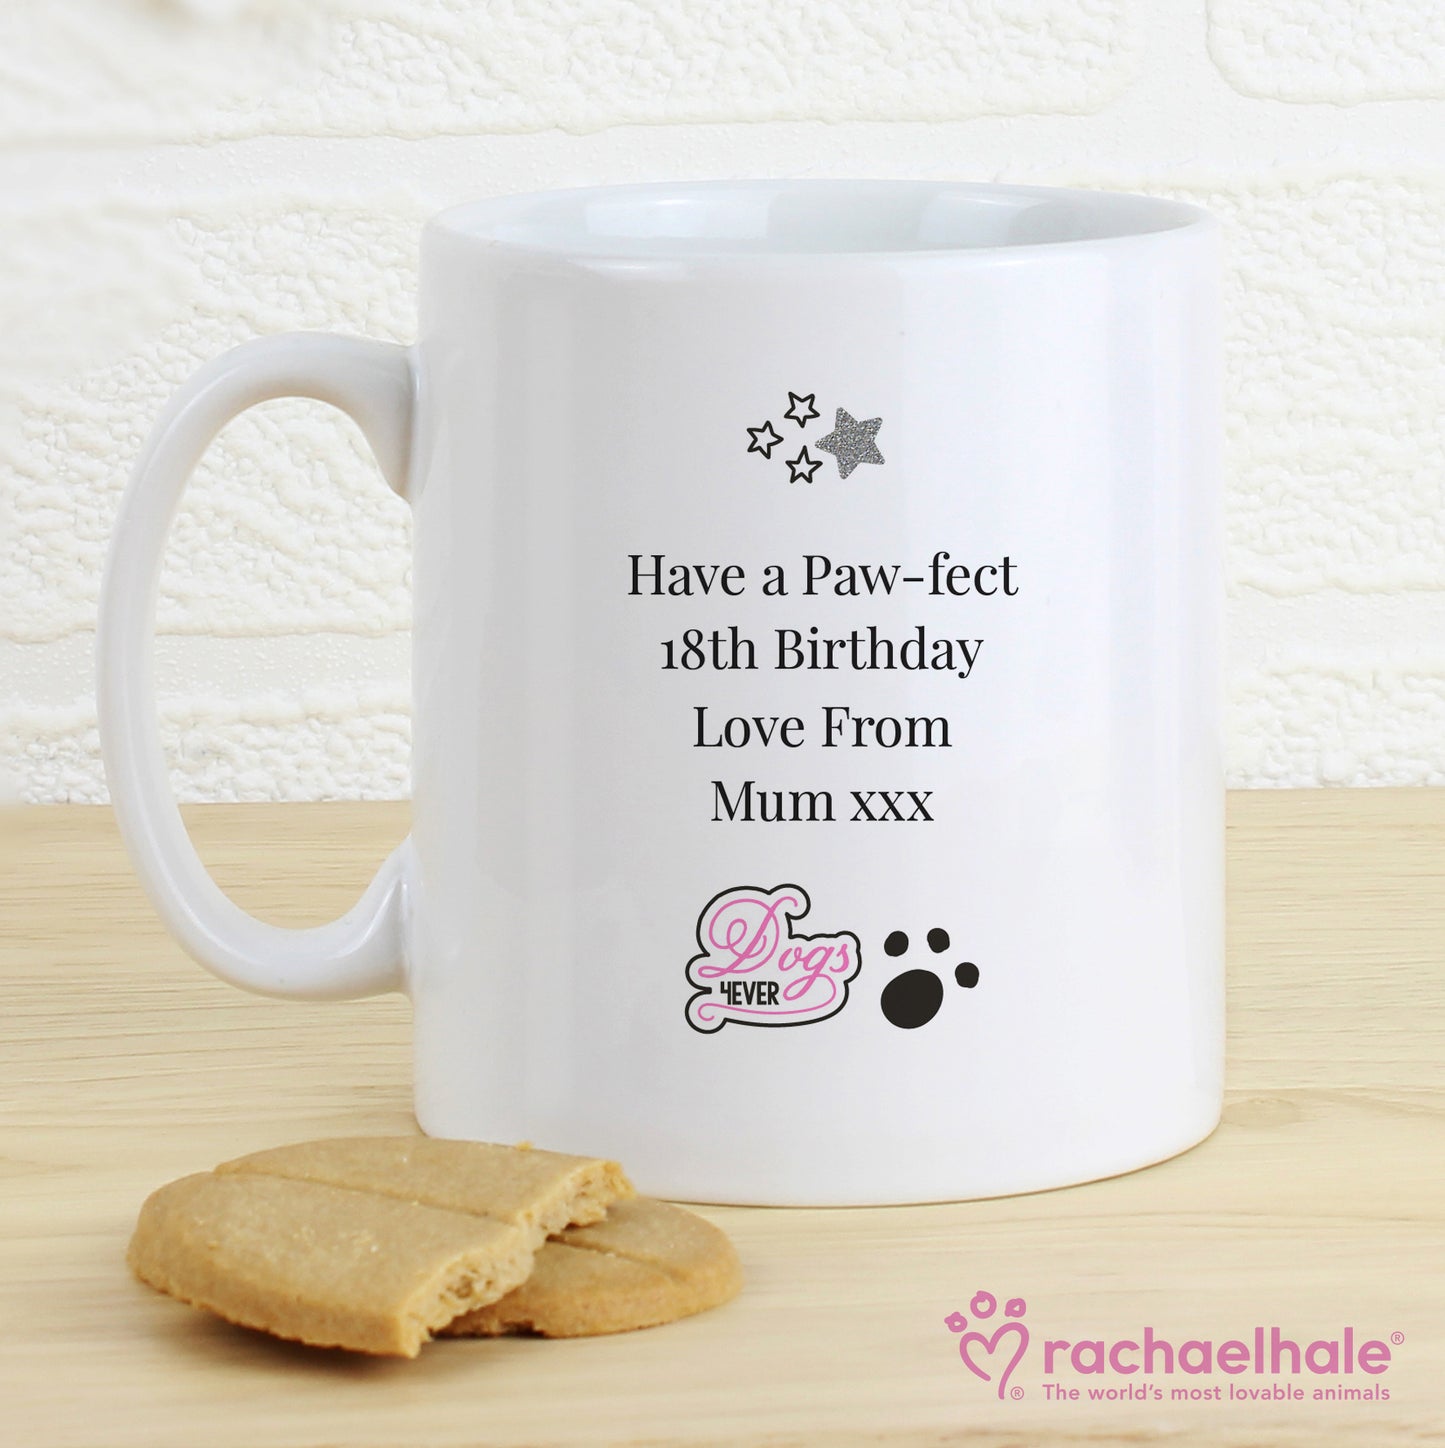 Personalised Rachael Hale Doodle Pug Mug - Personalise It!